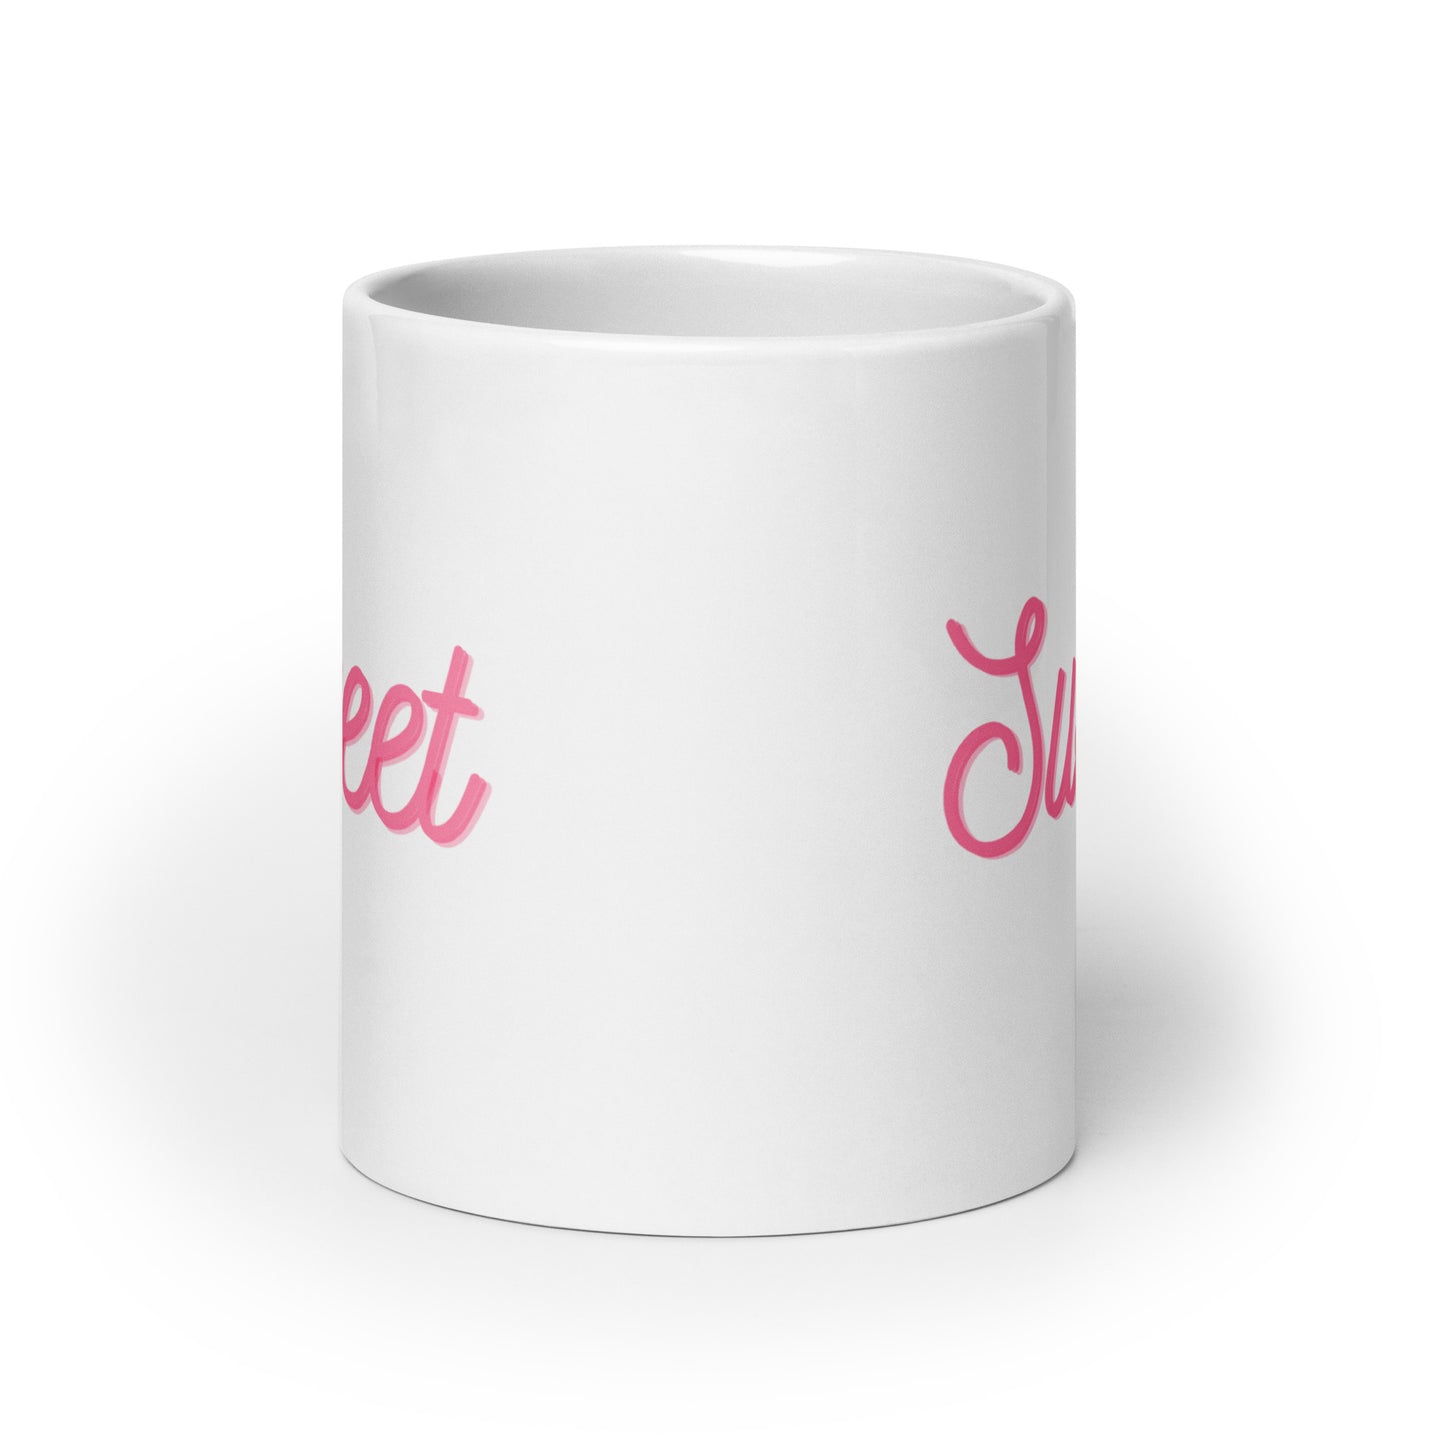 Sweet-White glossy 20 oz mug